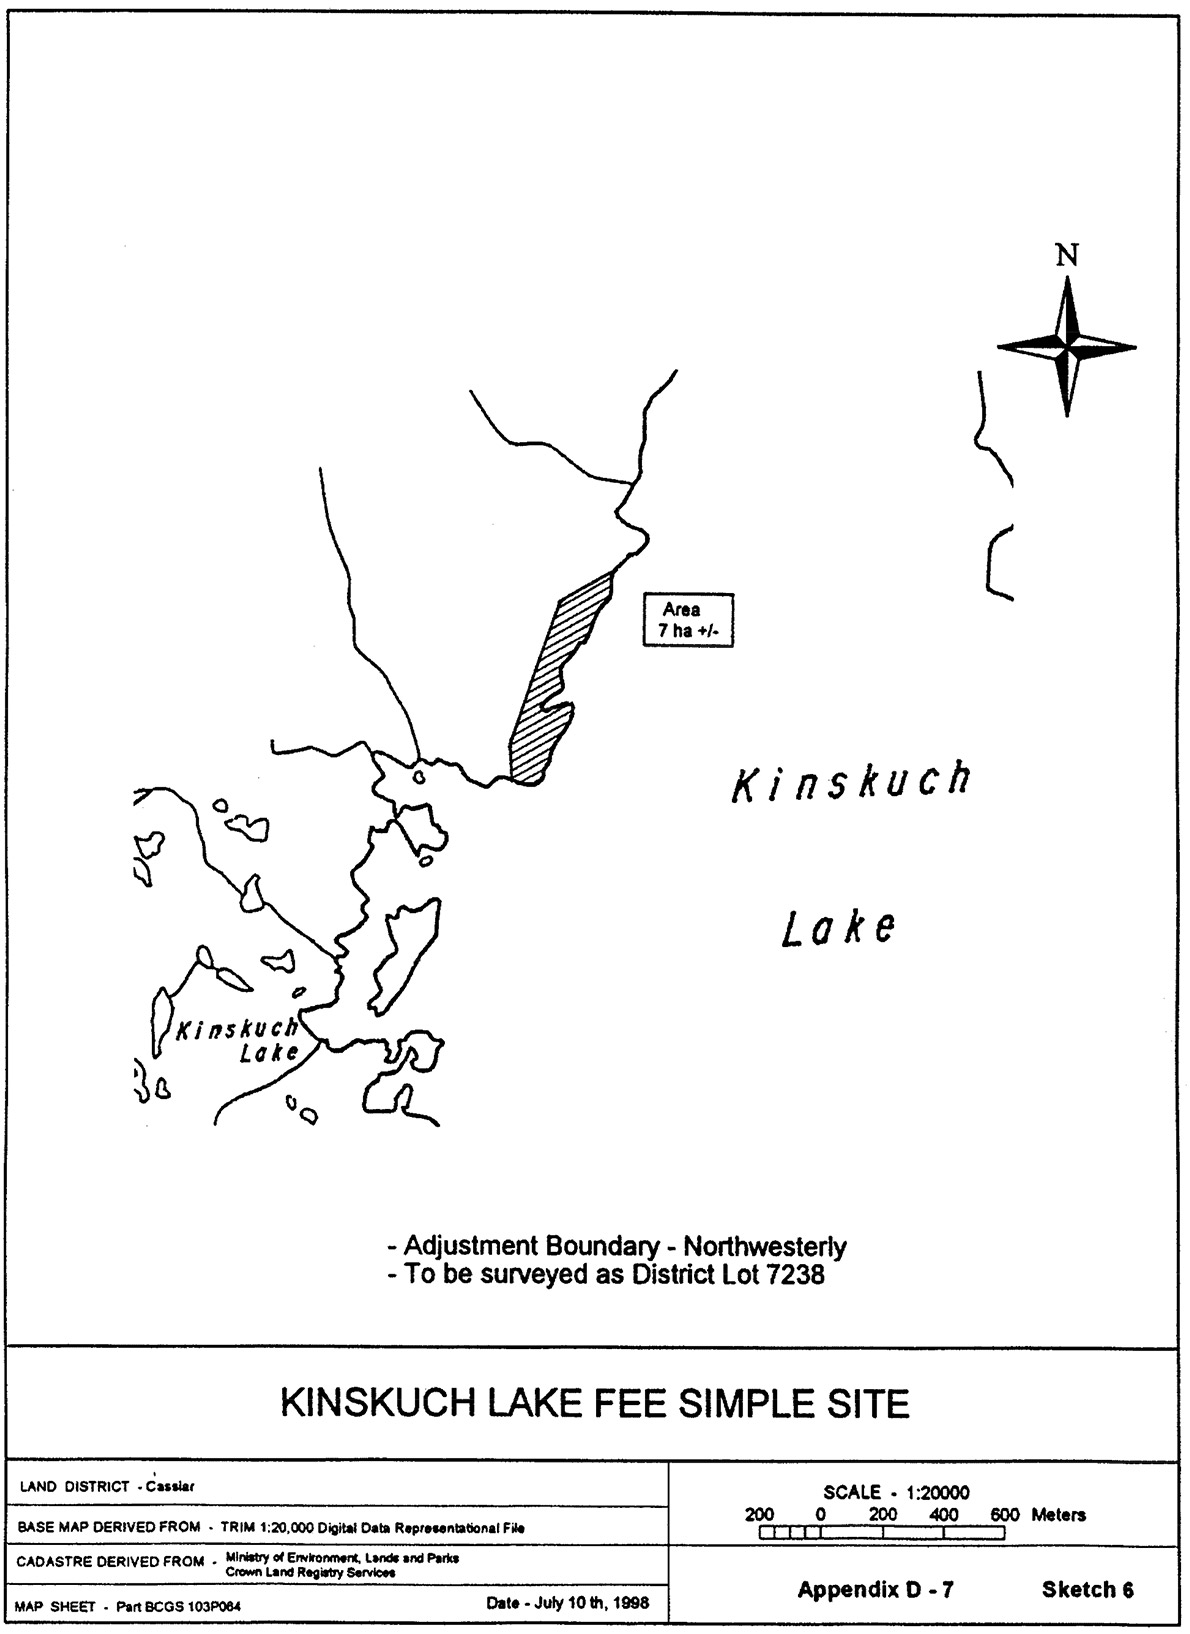 Sketch of Kinskuch Lake